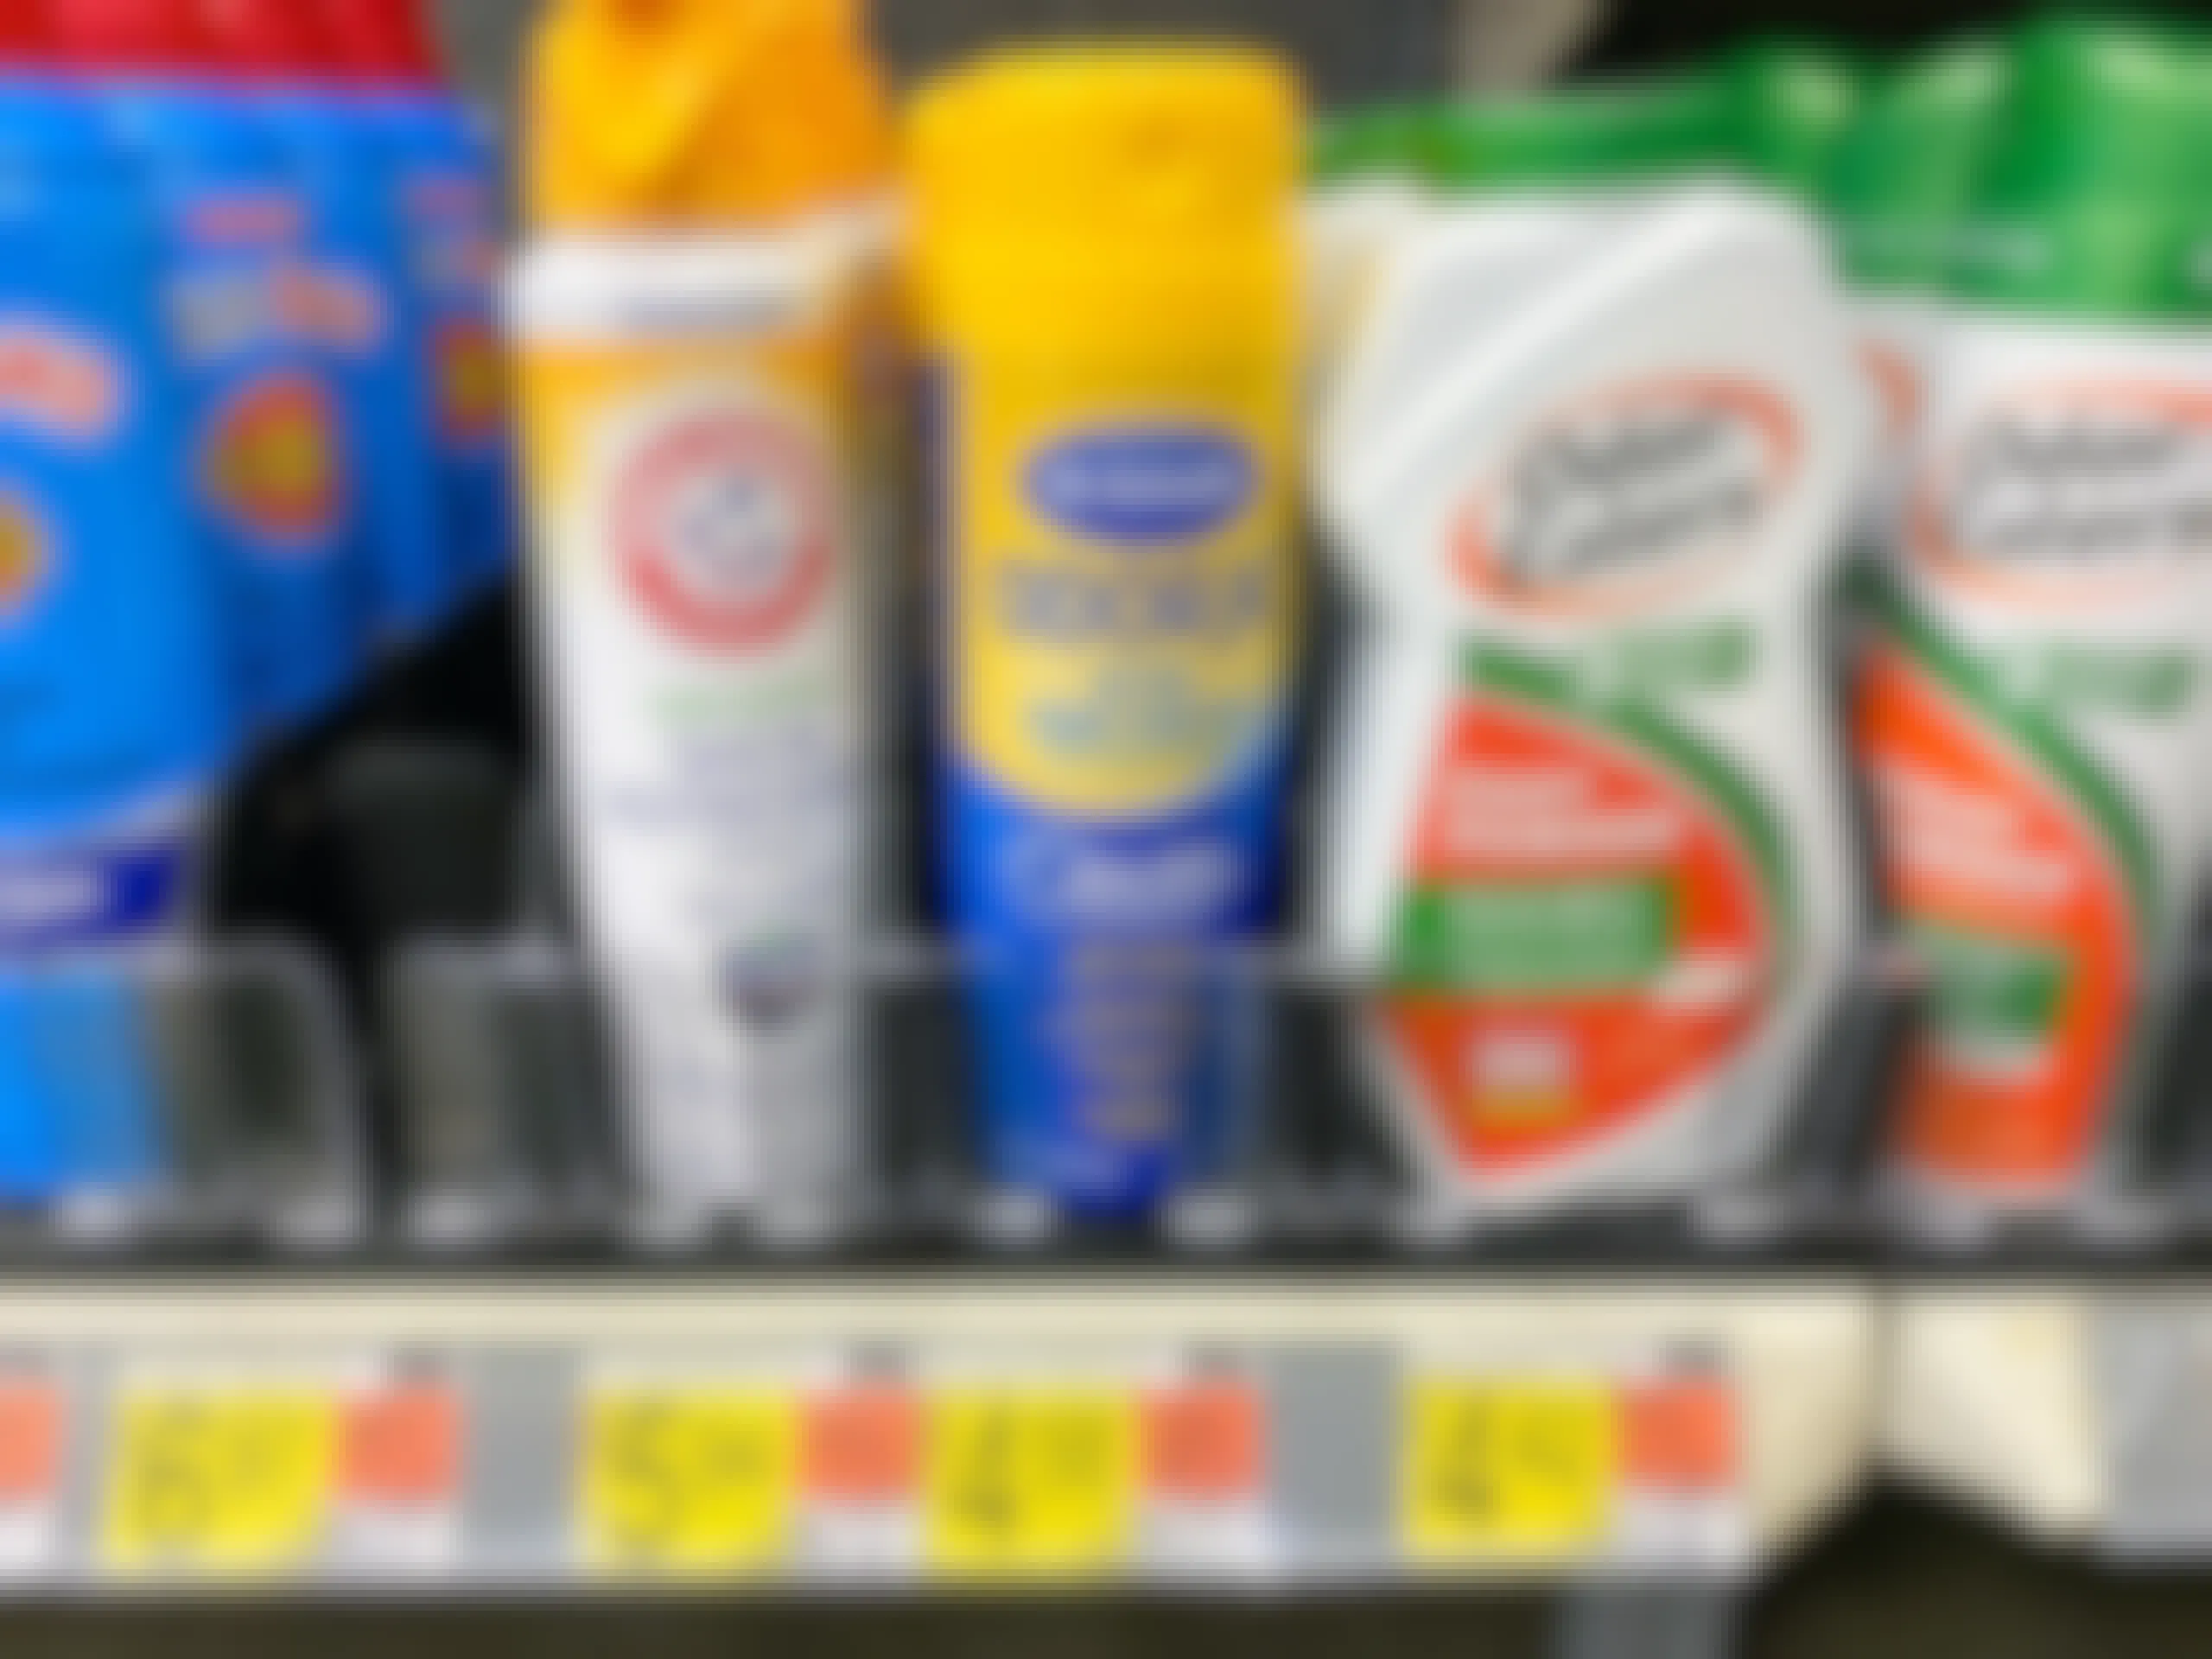 Dr Scholl's Odor-X Spray Powder on shelf at Walmart